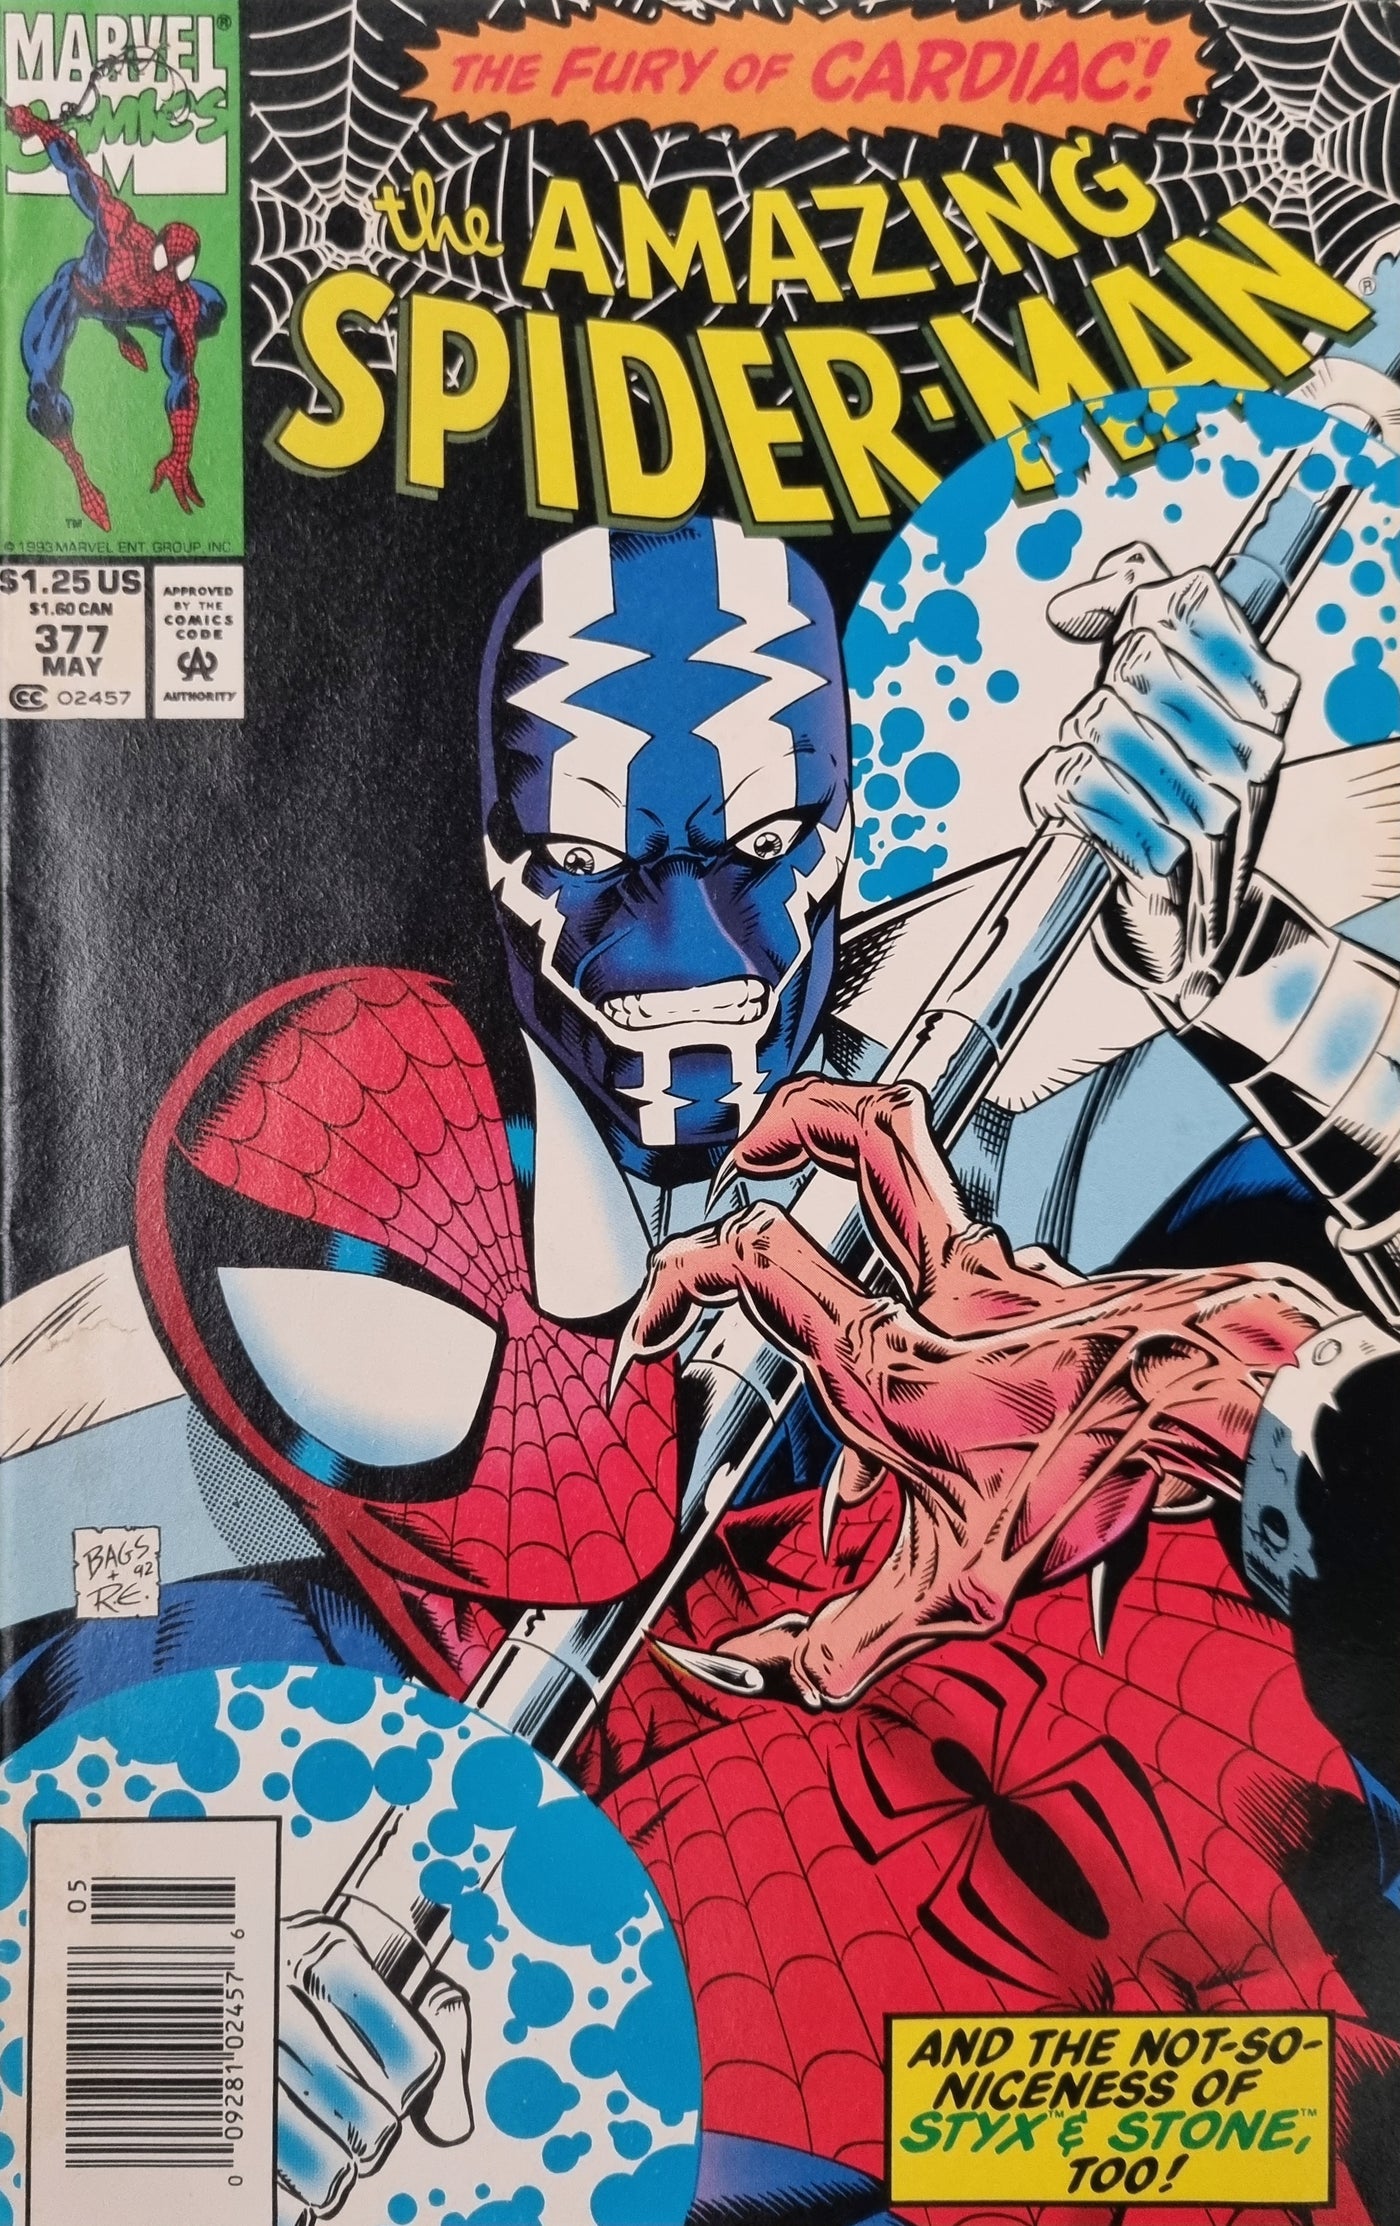 The Amazing Spider-Man #377